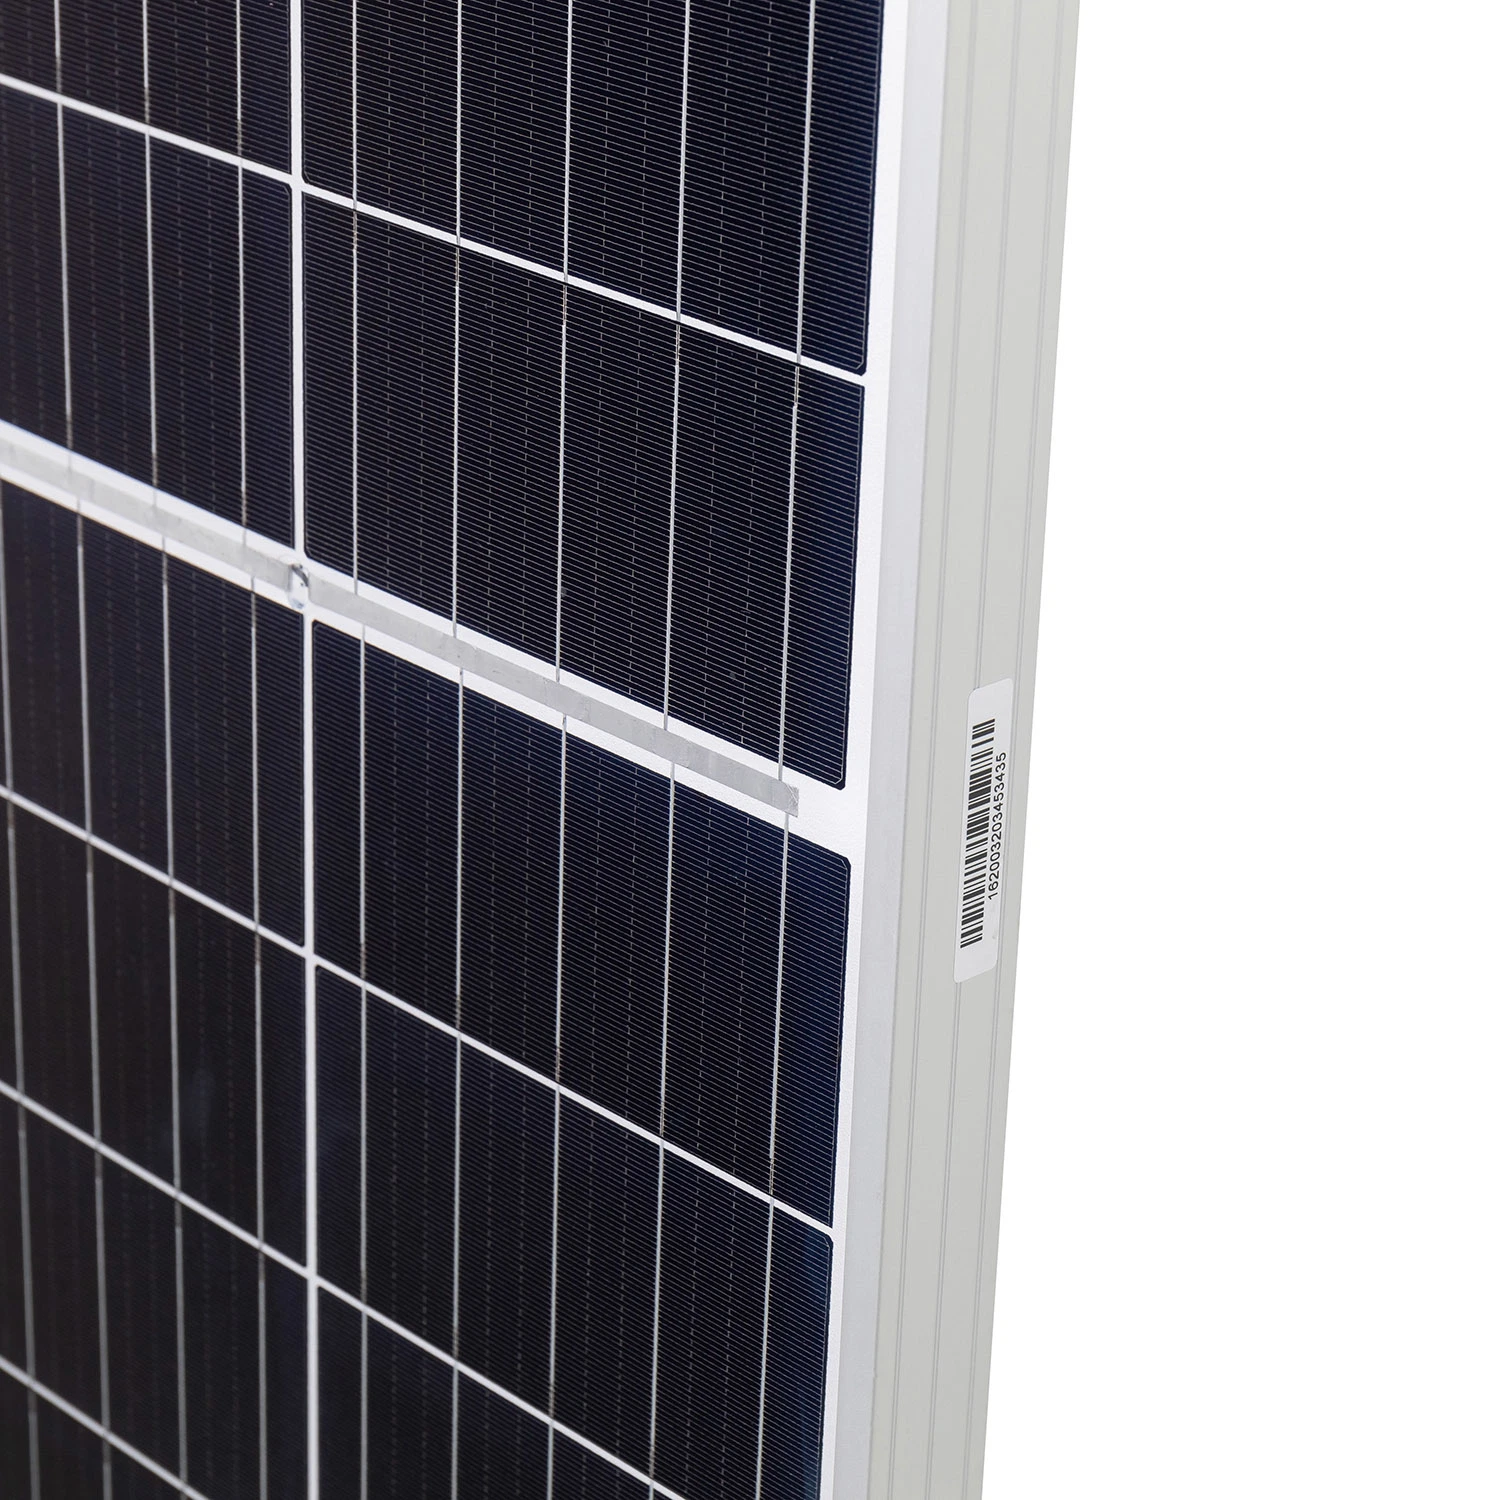 Sunpro Power 440W Half Cut Solar Panel